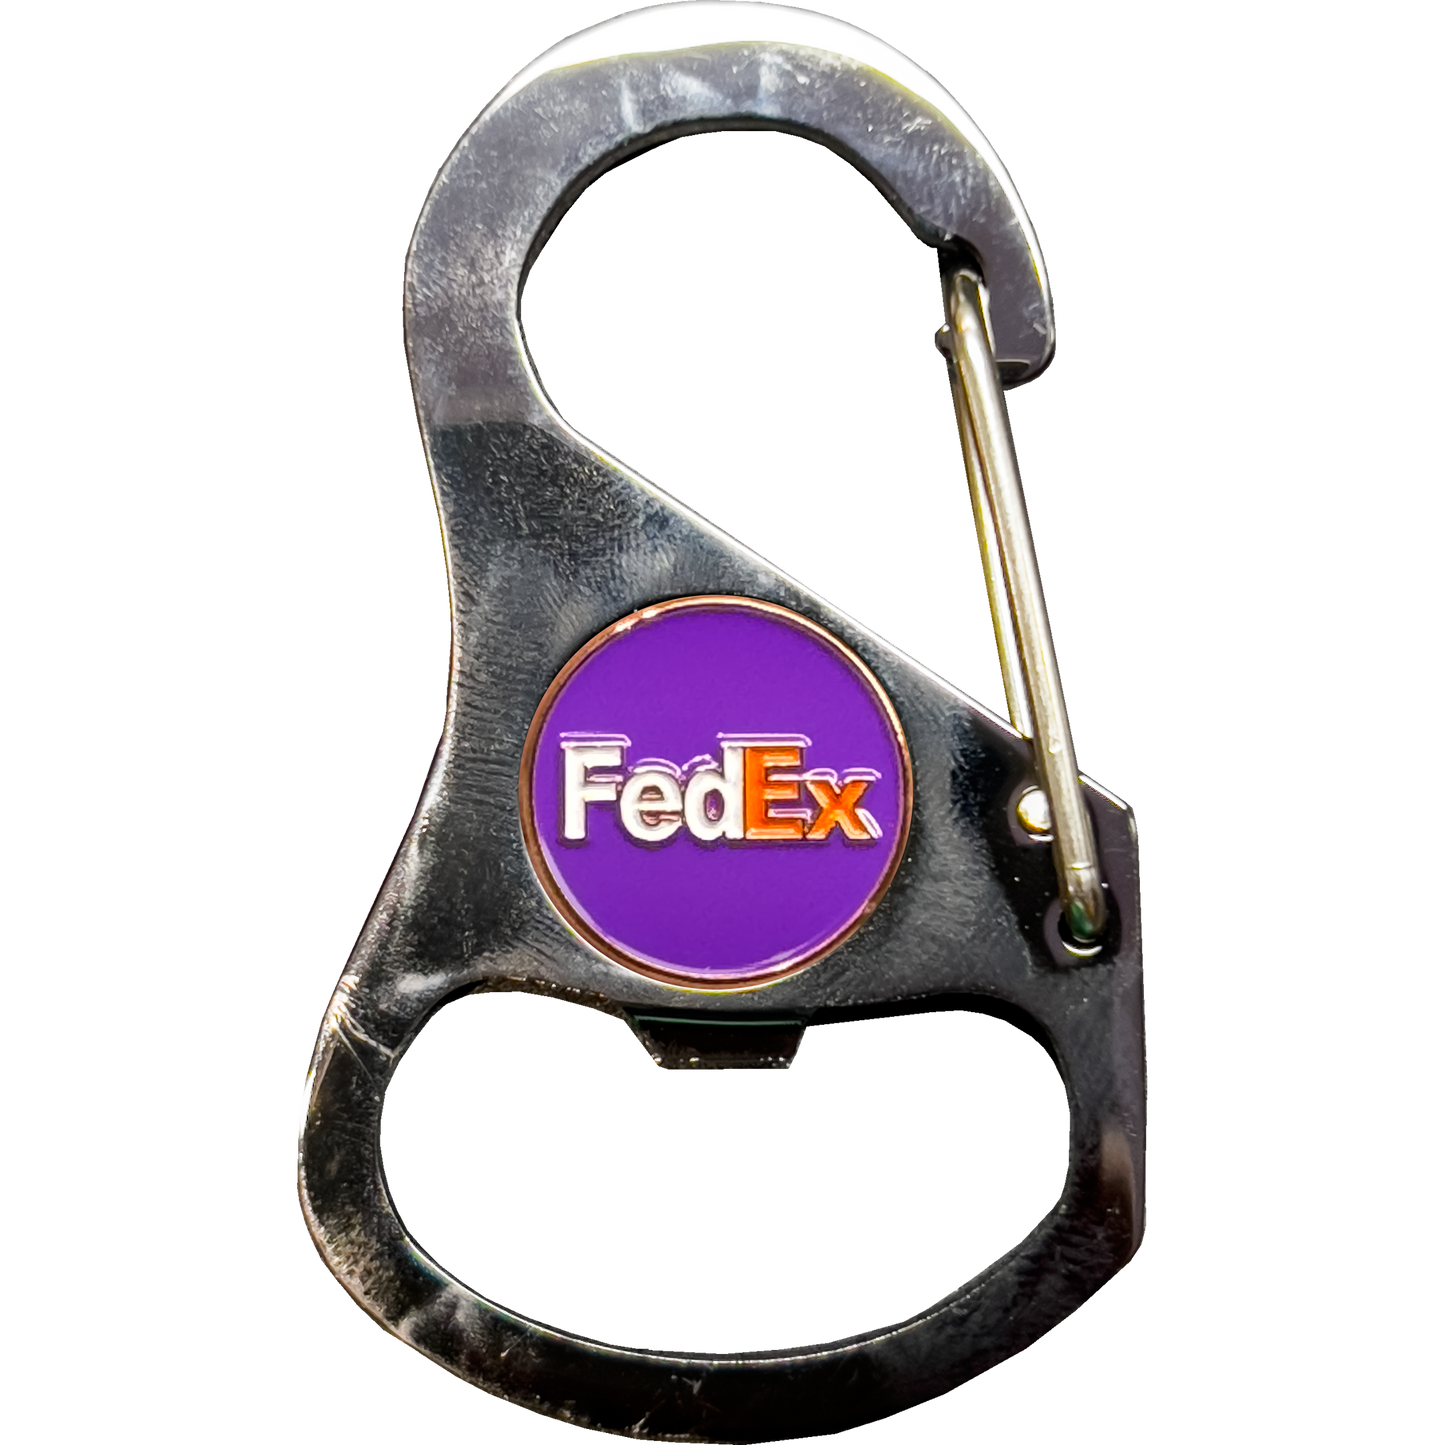 Fedex Truck Driver keys Carabiner Keychain with 4 carabiner clips vest clip and bottle opener function